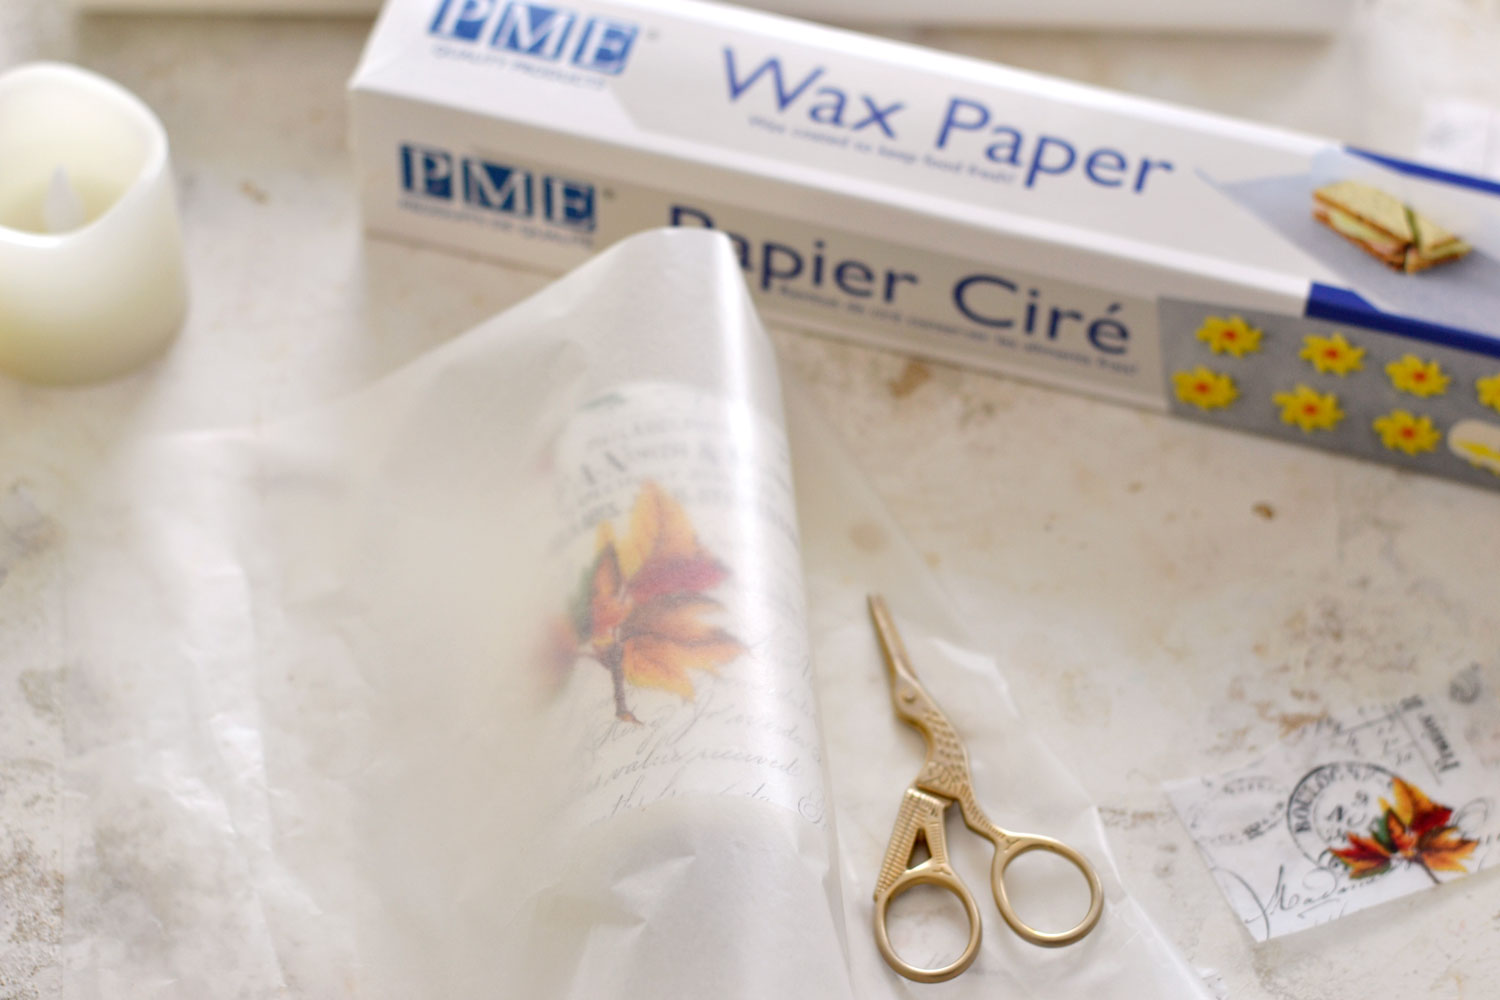 Measuring wax paper